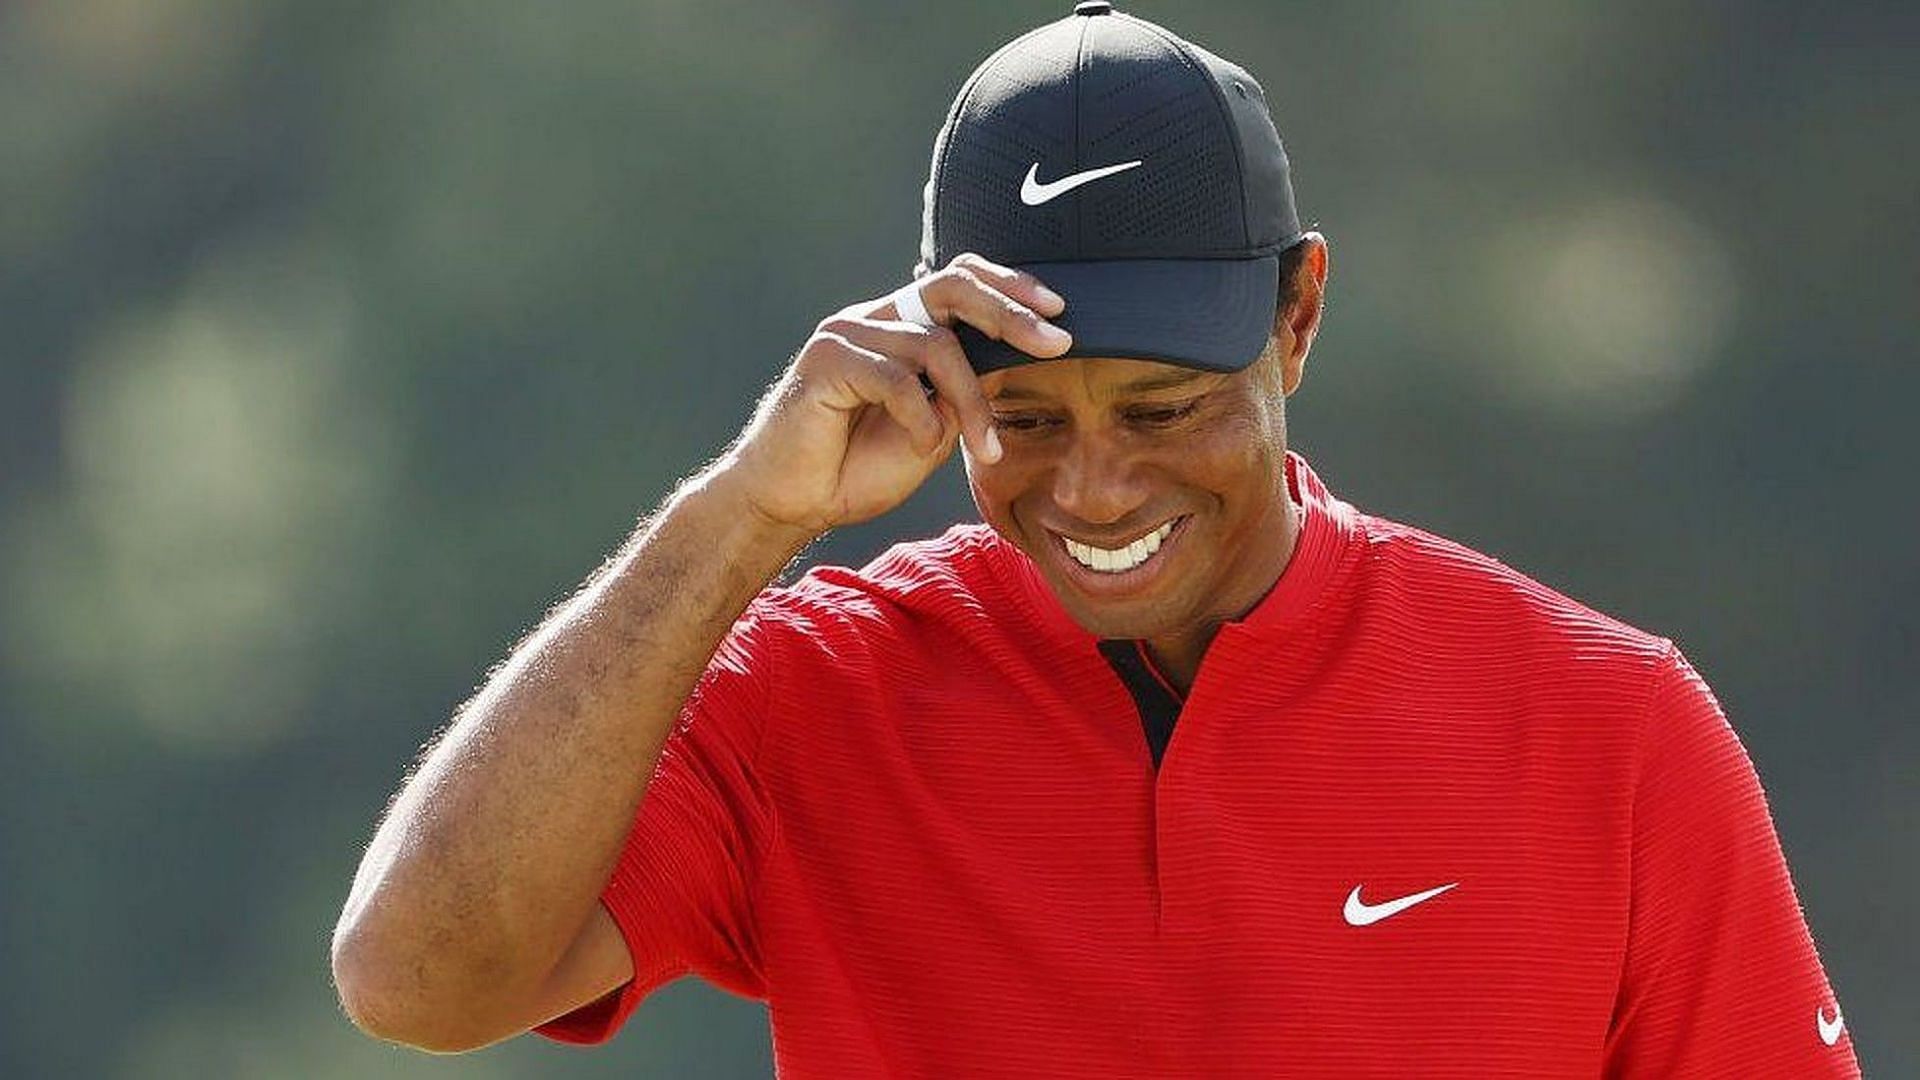 American golfer Tiger Woods ( Image via Getty)